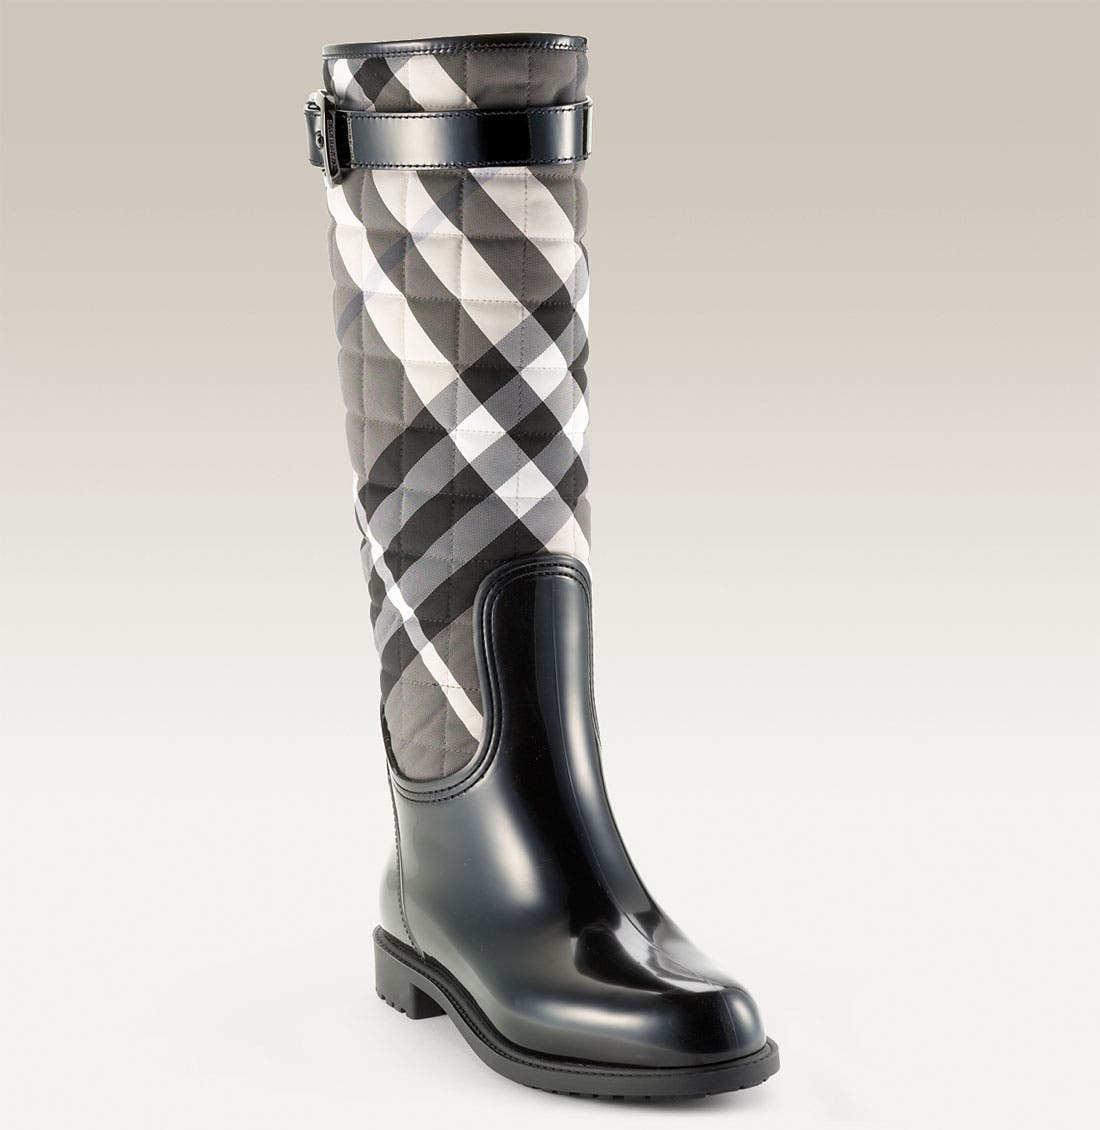 burberry rain boots grey